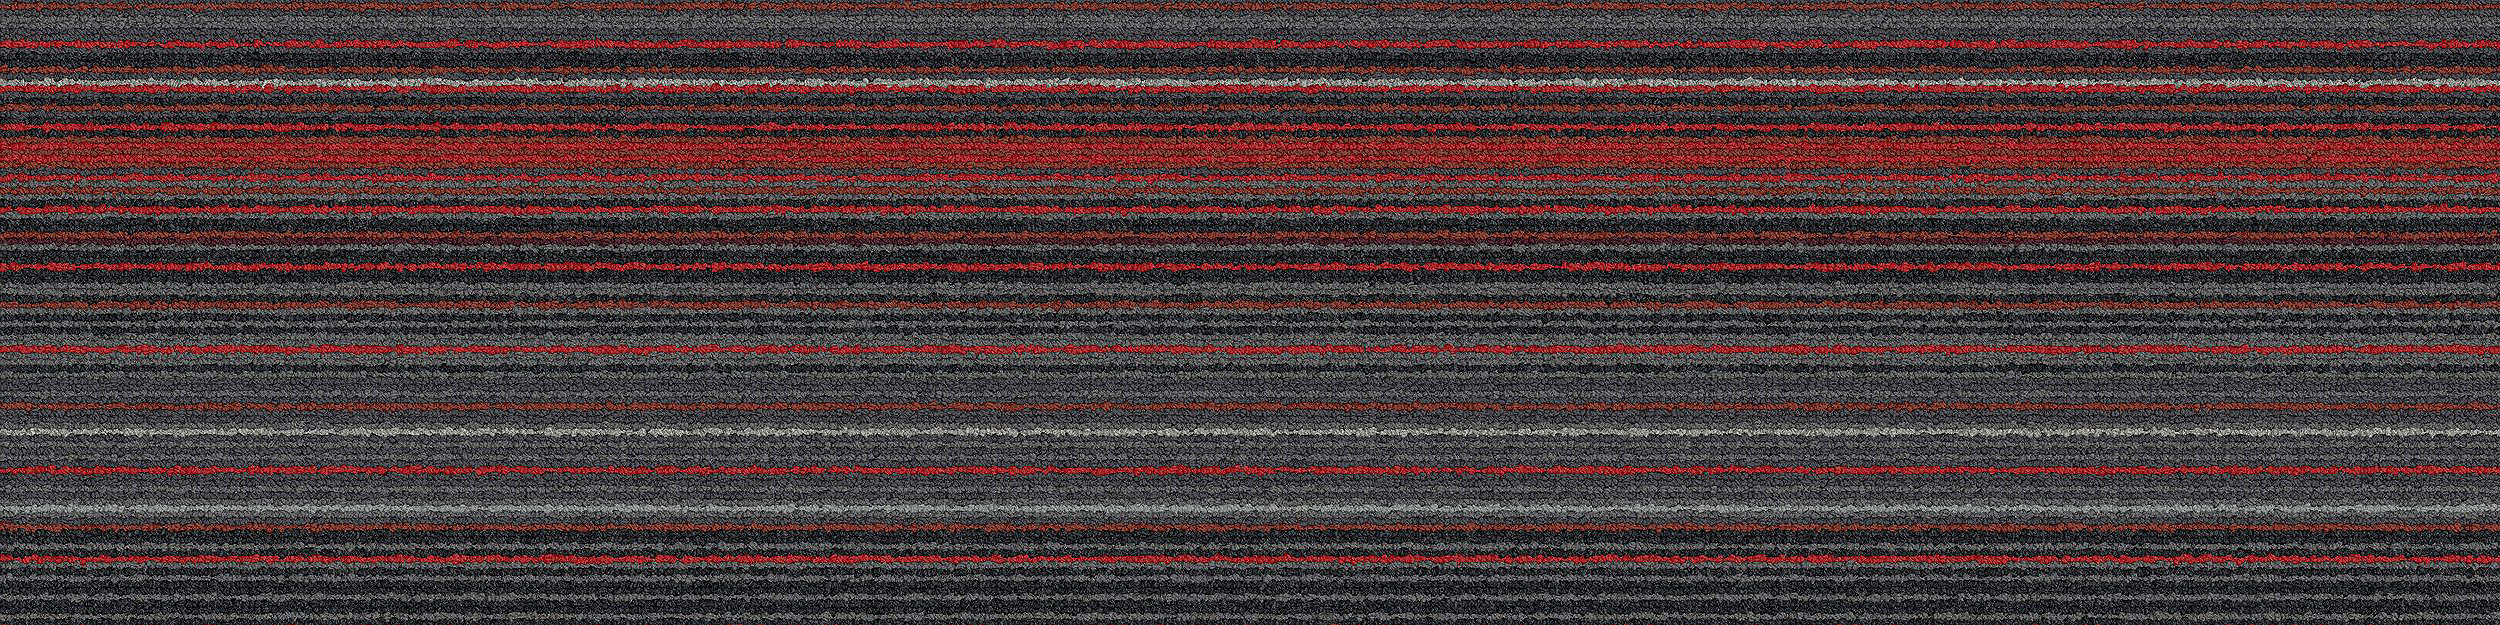 Aglow Carpet Tile in Iron Poppy imagen número 5